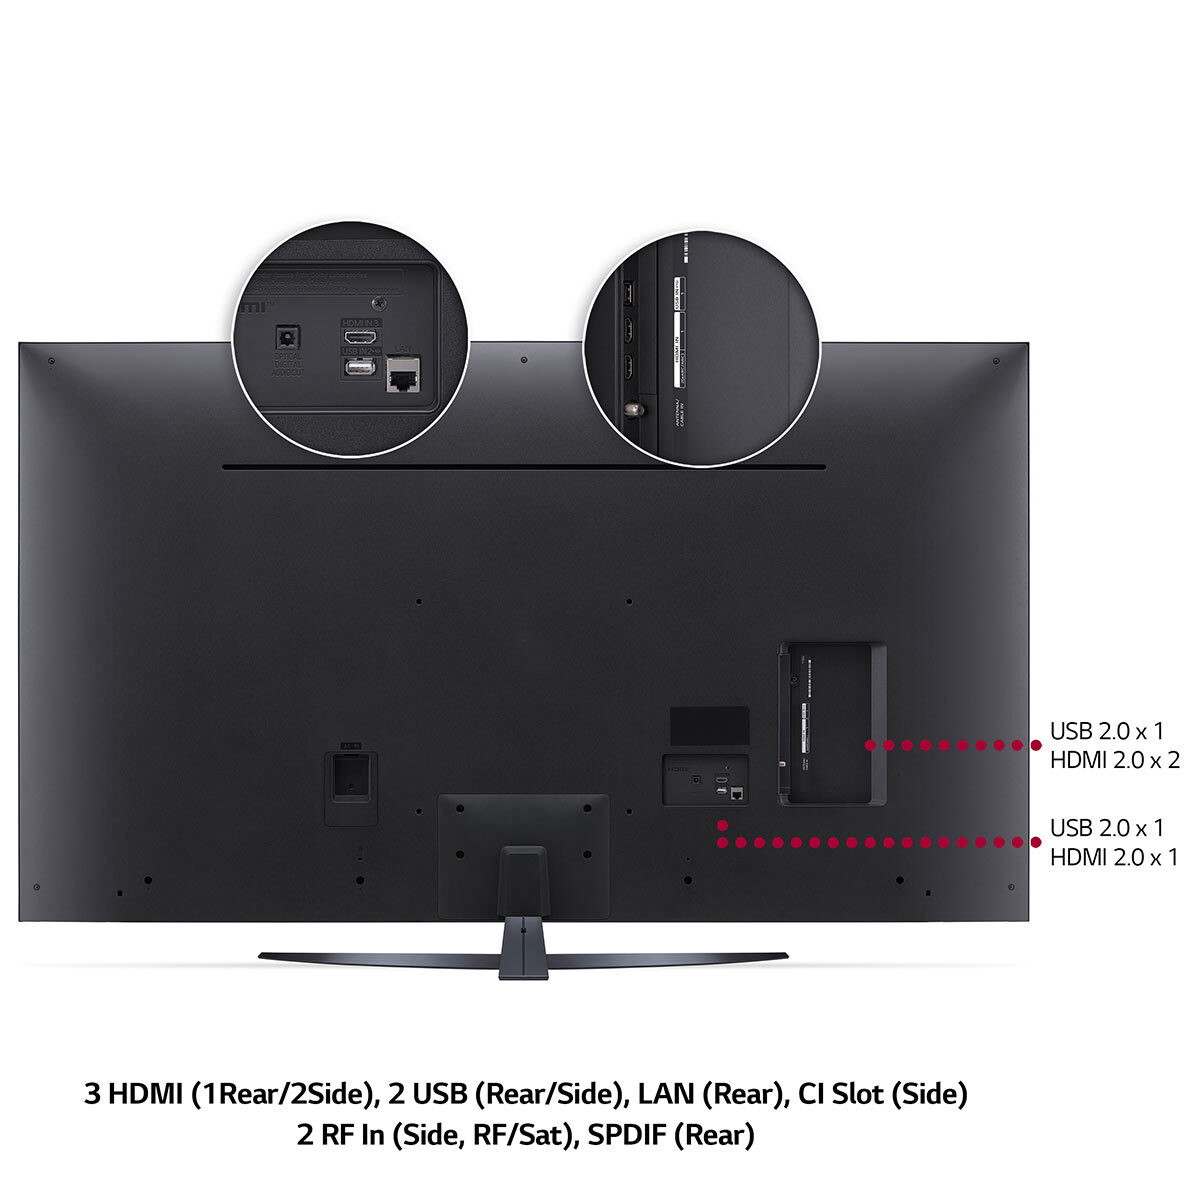 Buy LG 65UP81006LA 65 Inch 4K Ultra HD Smart TV at costco.co.uk